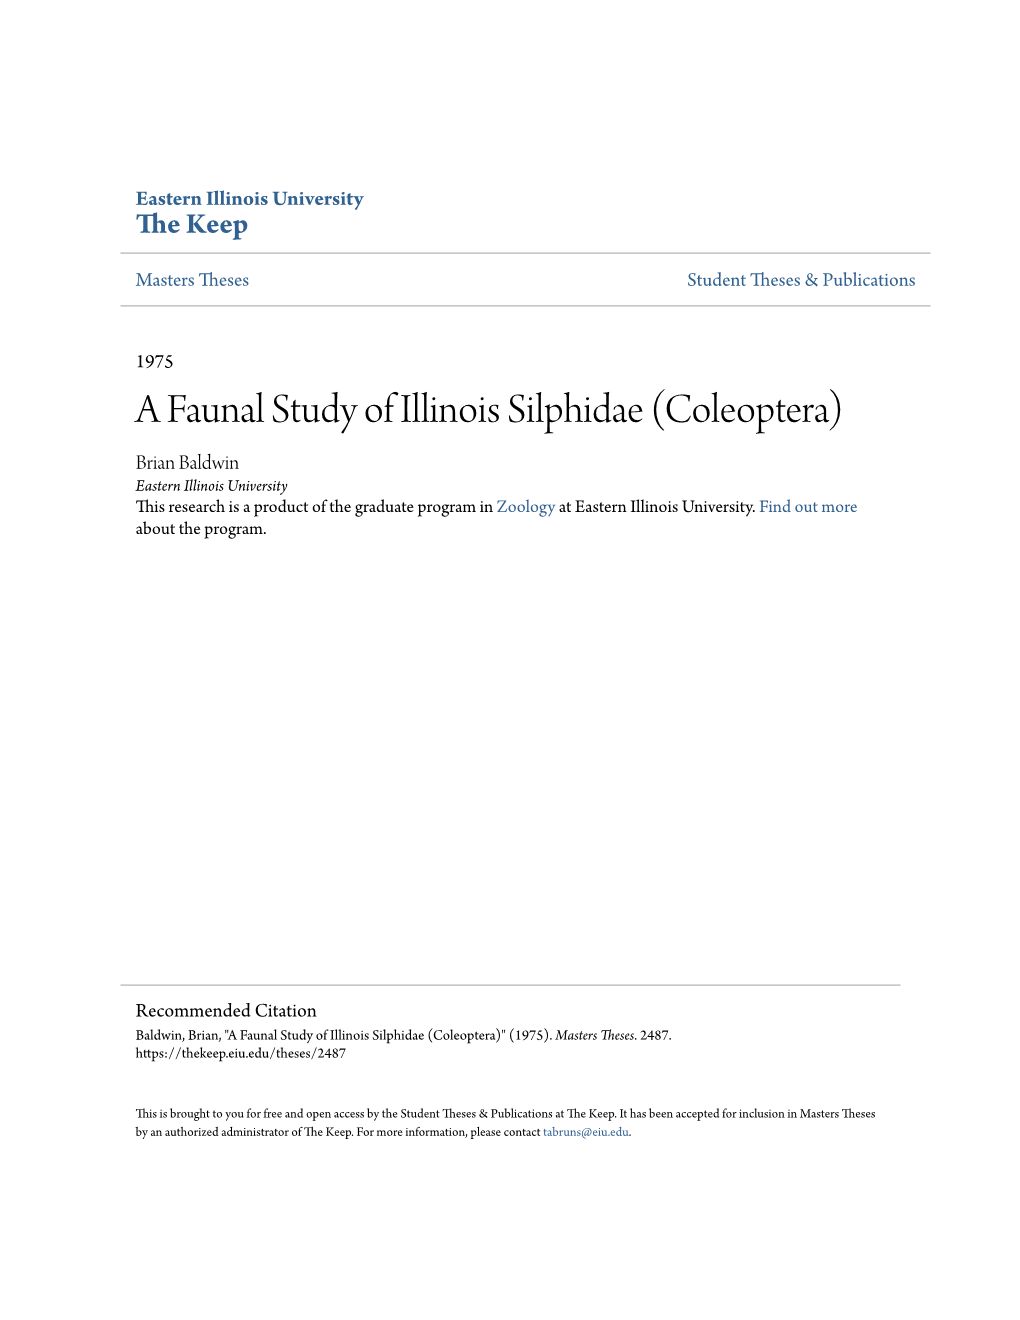 A Faunal Study of Illinois Silphidae (Coleoptera)